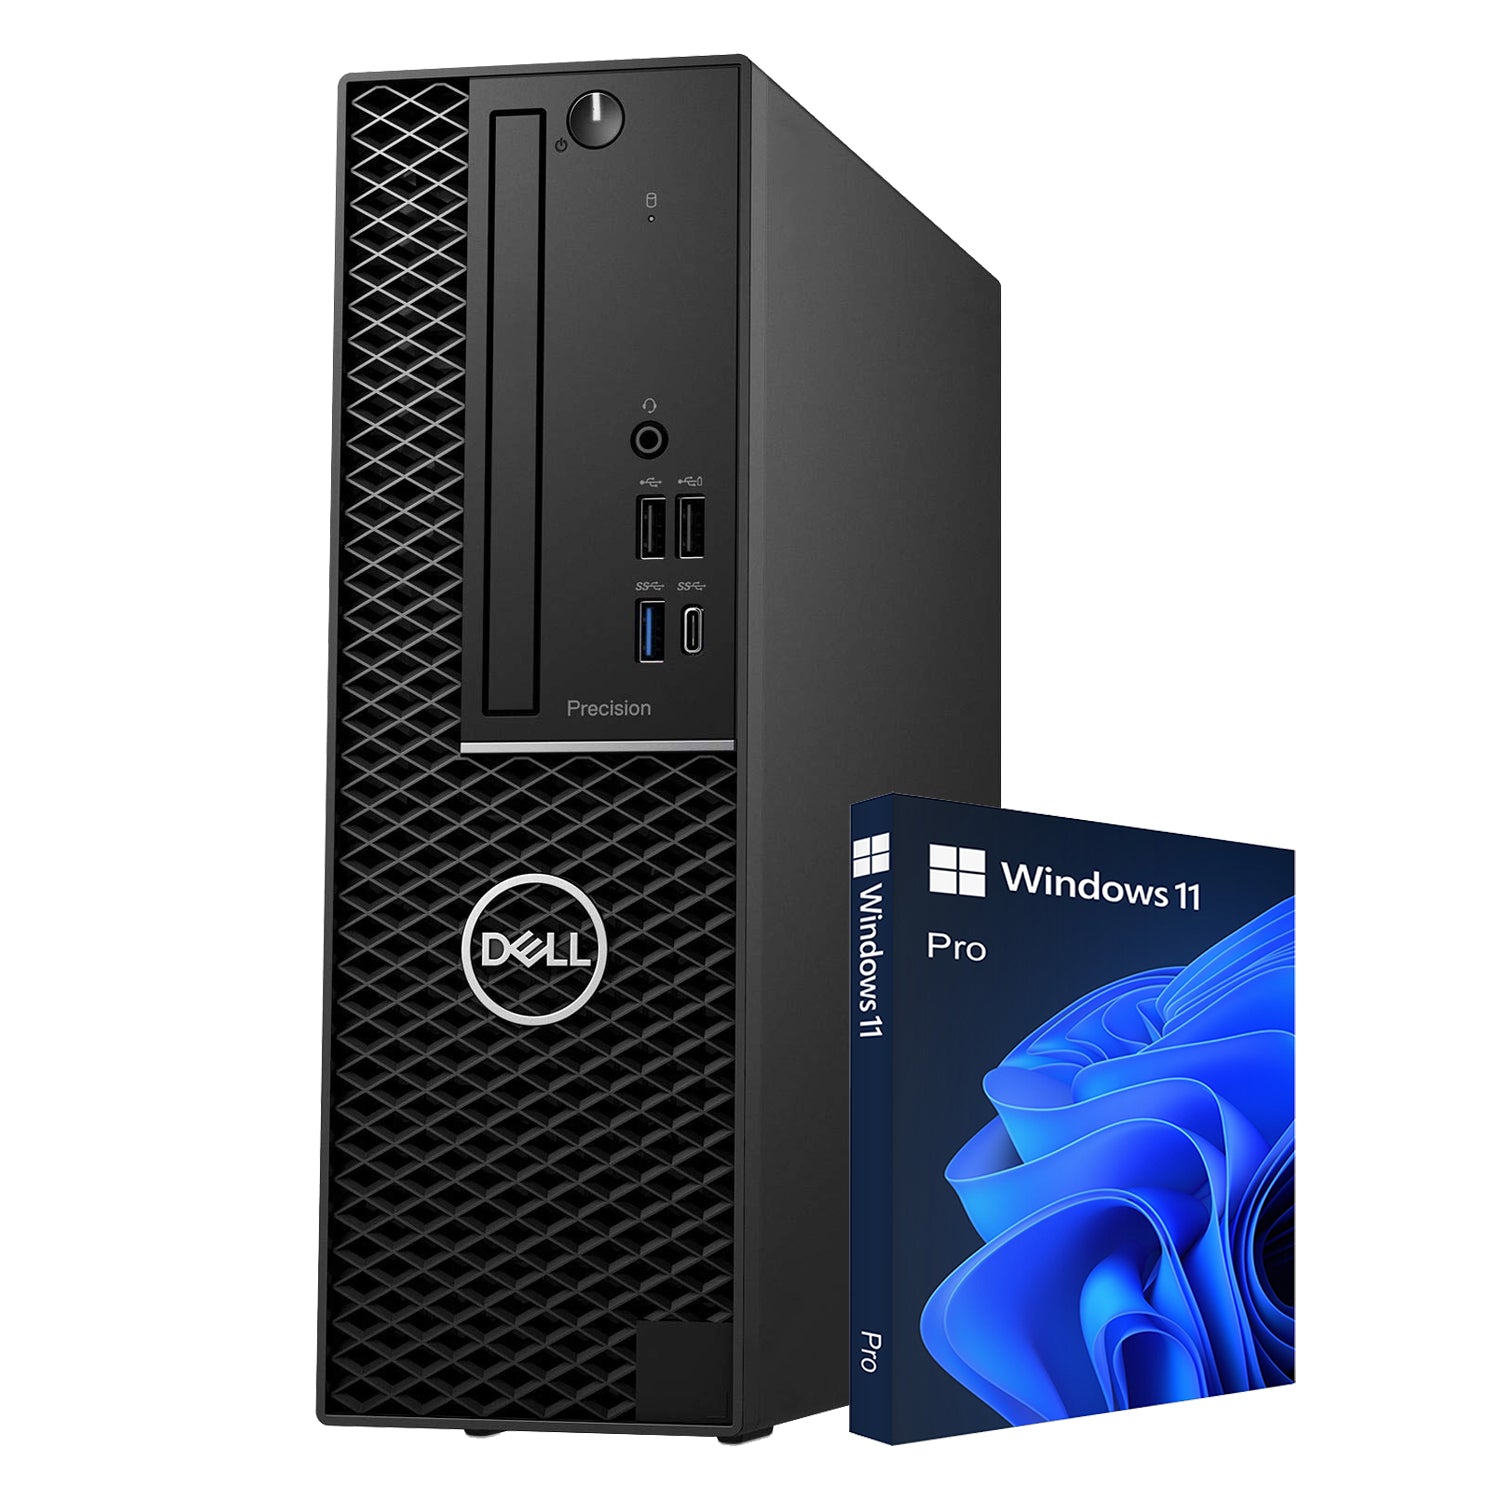 Dell Precision 3430 SFF Desktop Computer PC | Intel Hexa-Core i5-8500 Gen up to 4.10GHz Processor | 16GB - 32GB DDR4 RAM 512GB - 2TB SSD | Windows 11 Pro - Refurbished